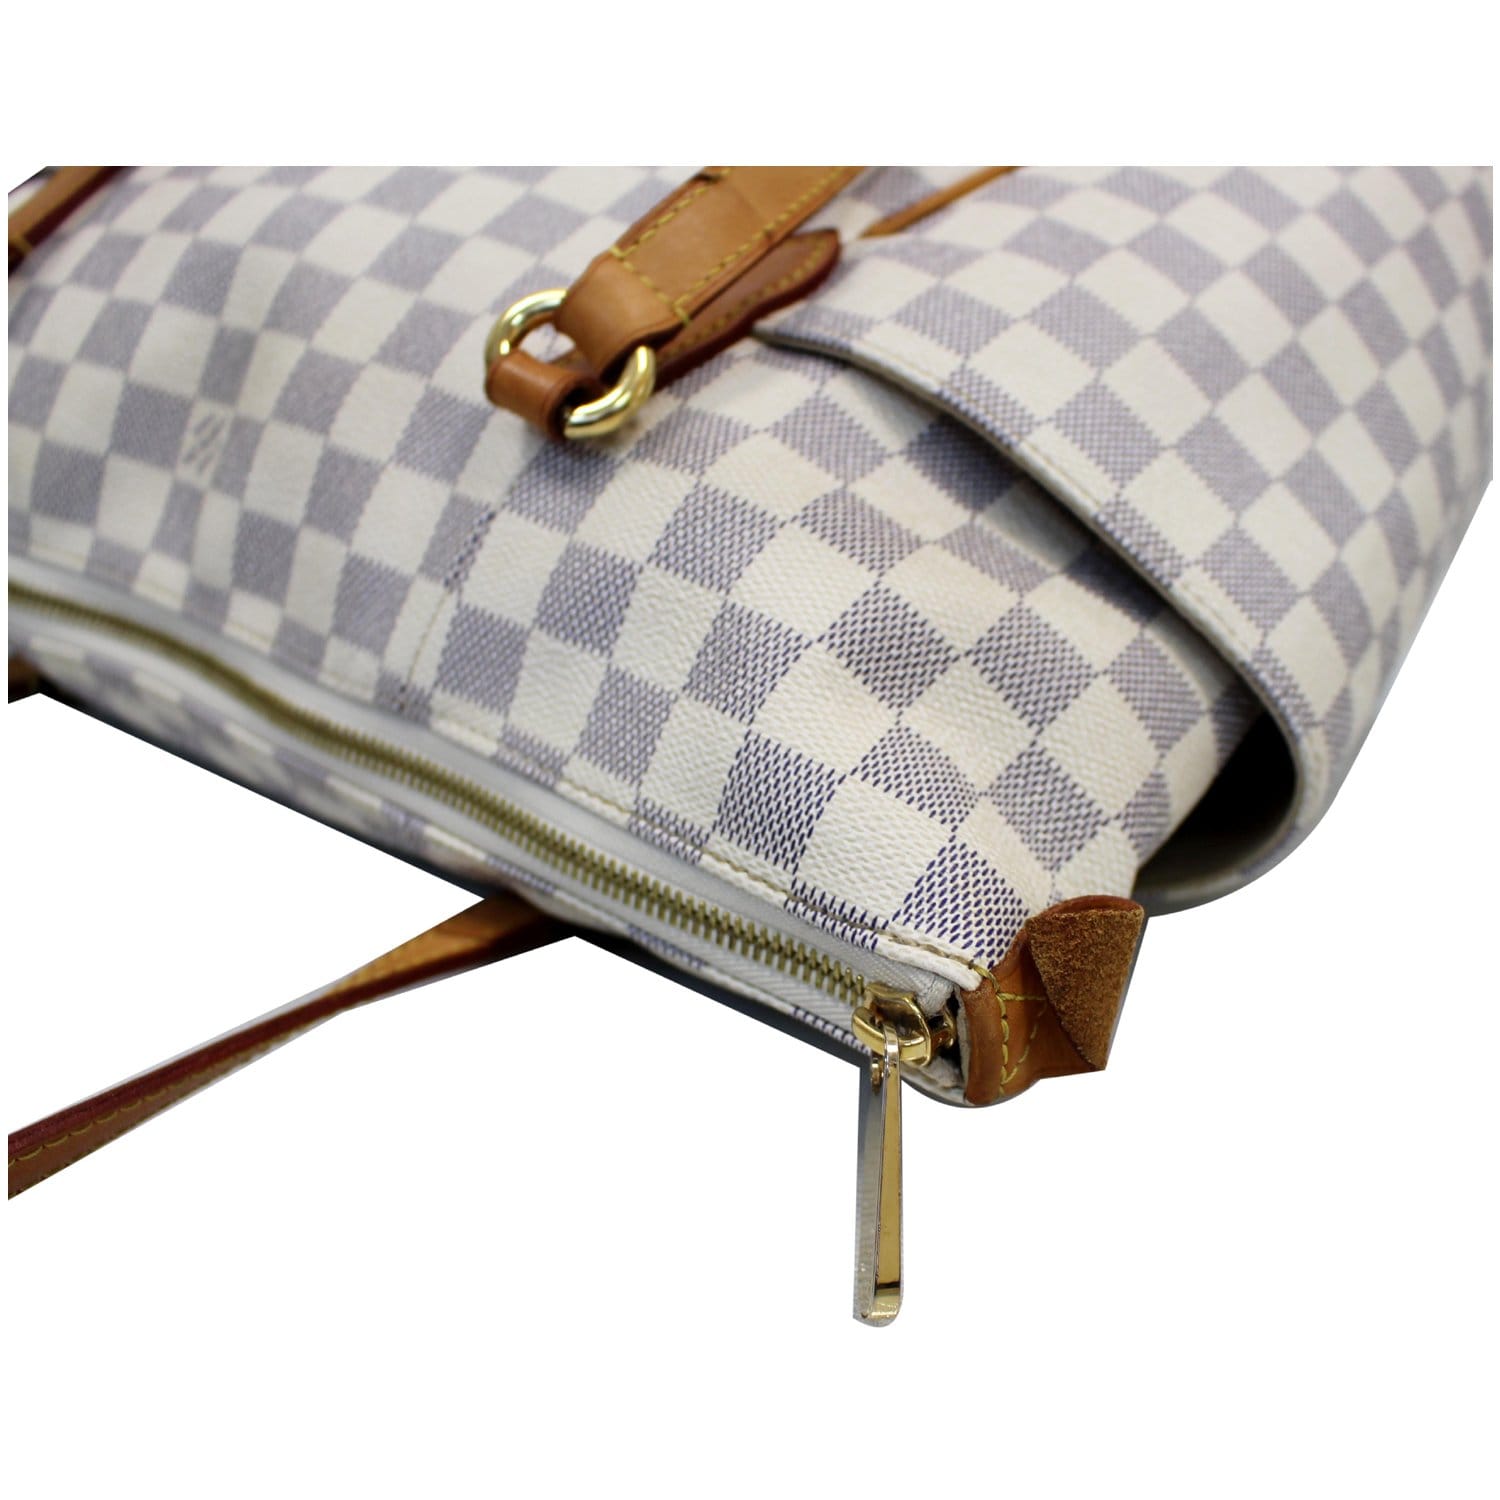 🔥NEW AUTH Louis Vuitton Medium/Large Foldover Storage Gift Dust Bag  15”x10.5”